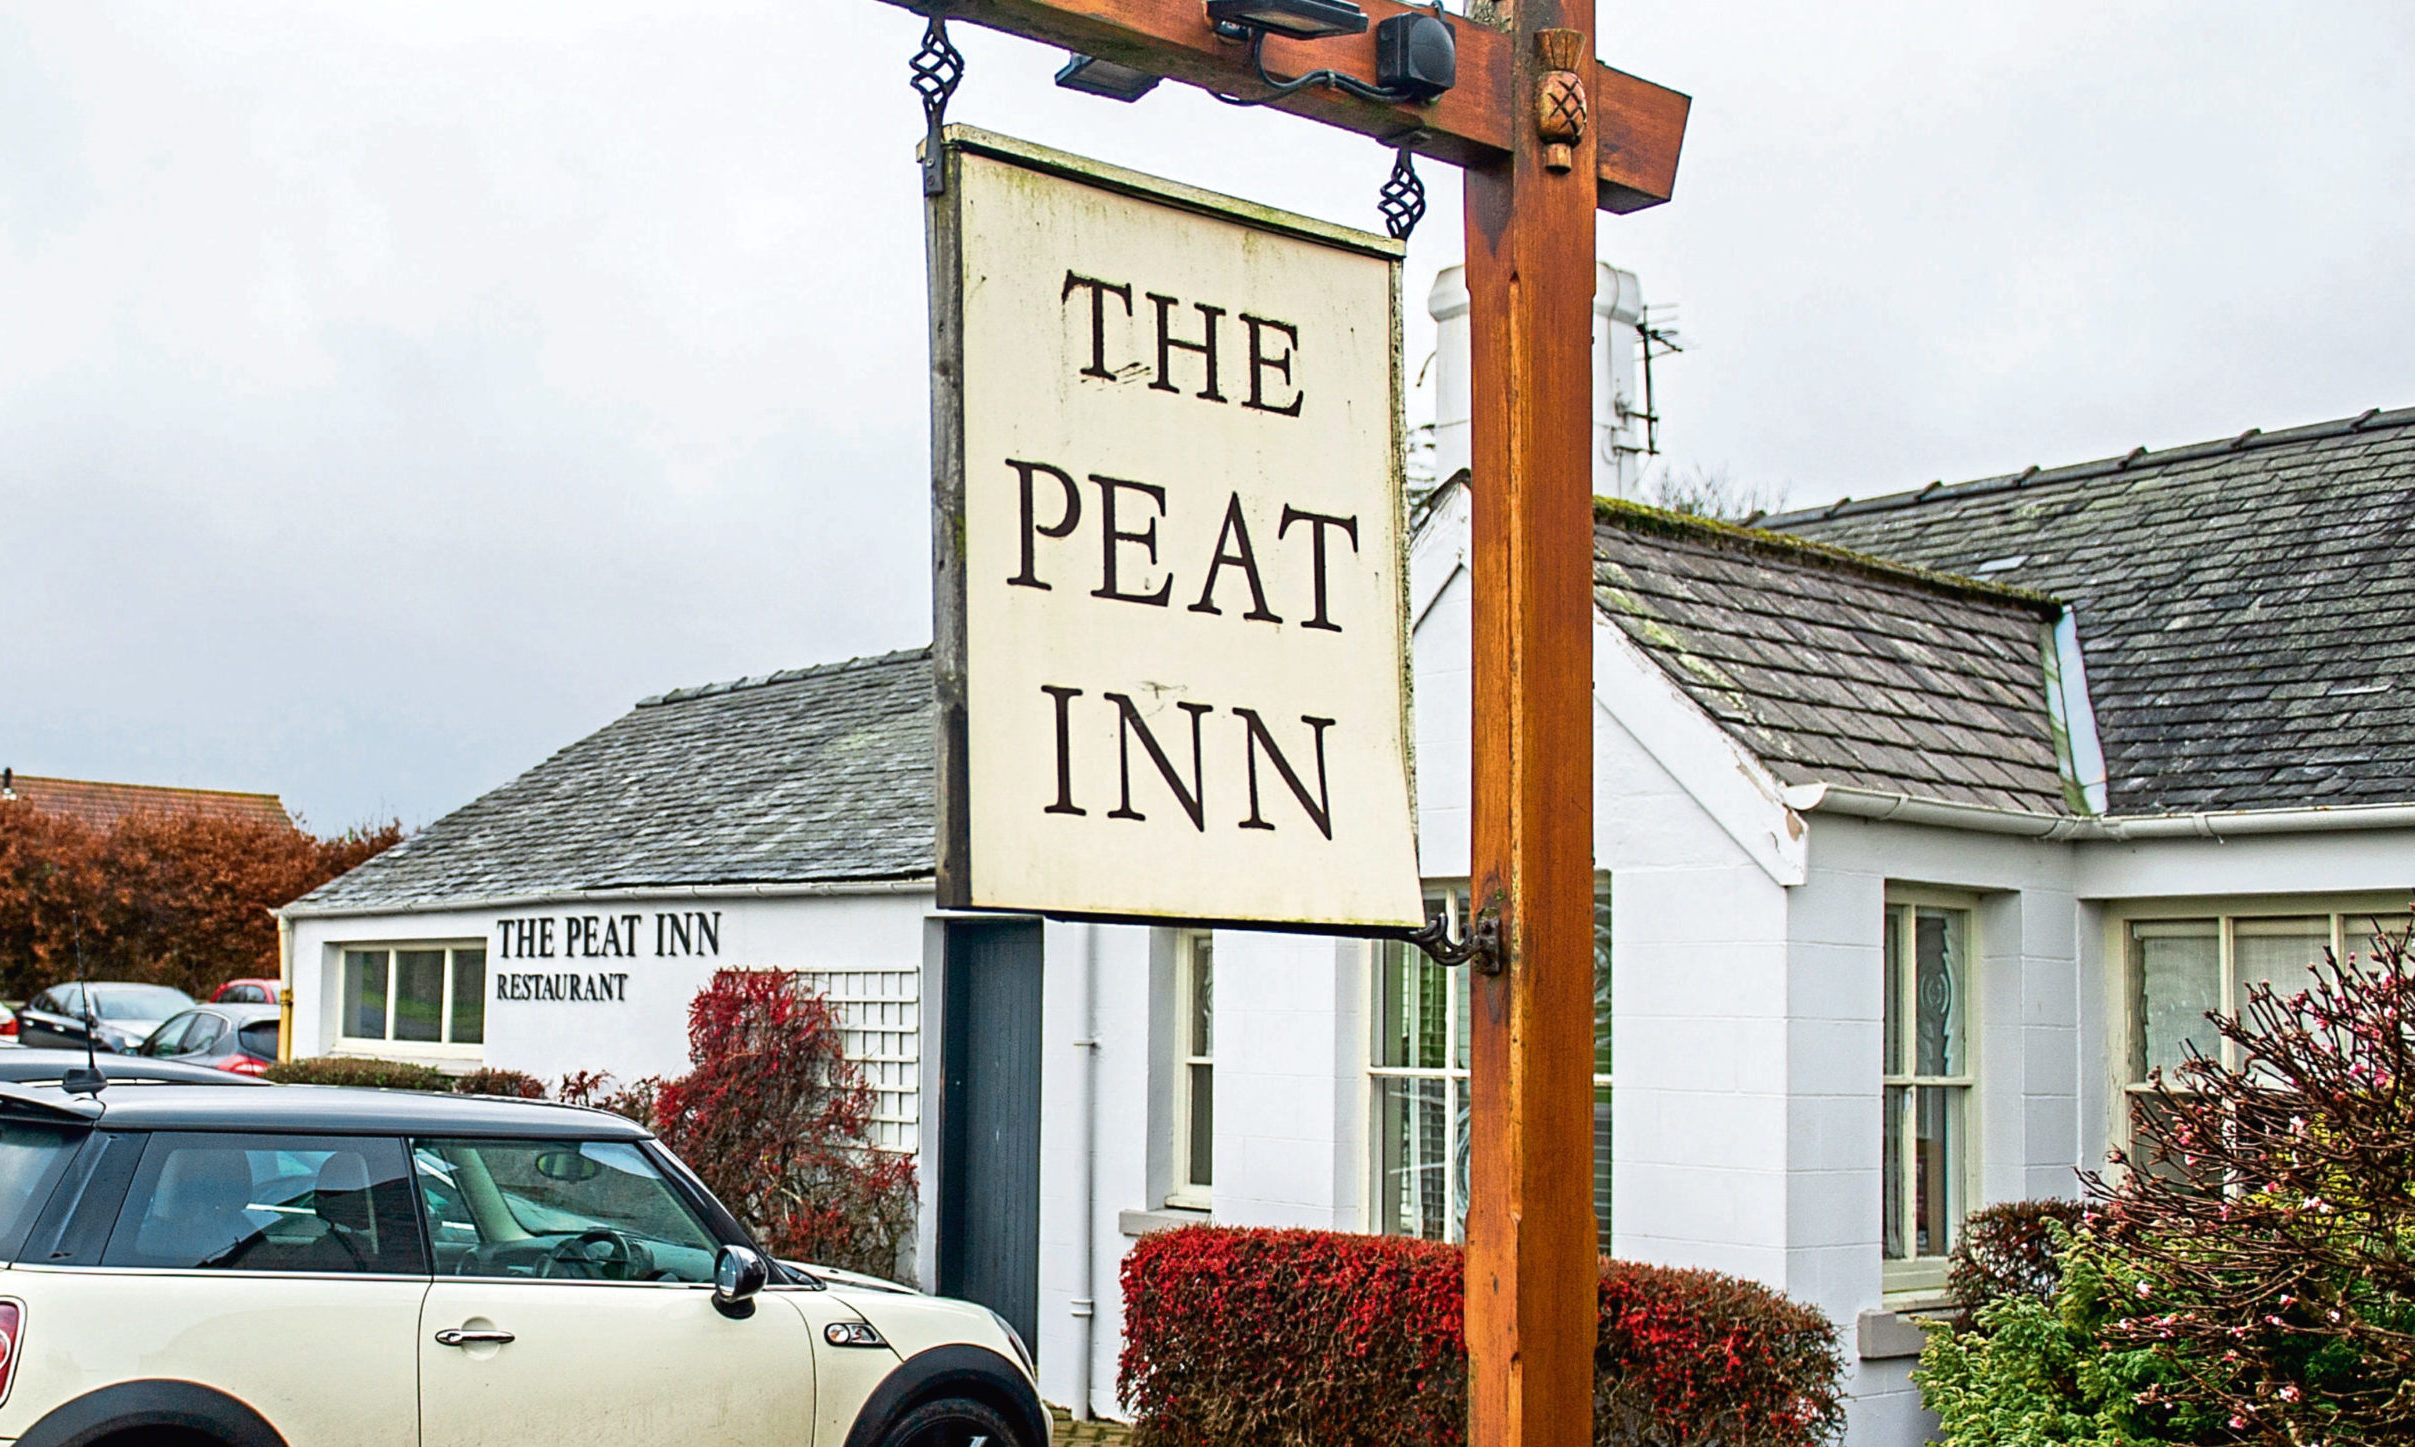 The Peat Inn, Cupar. Pictures:  Kim Cessford.